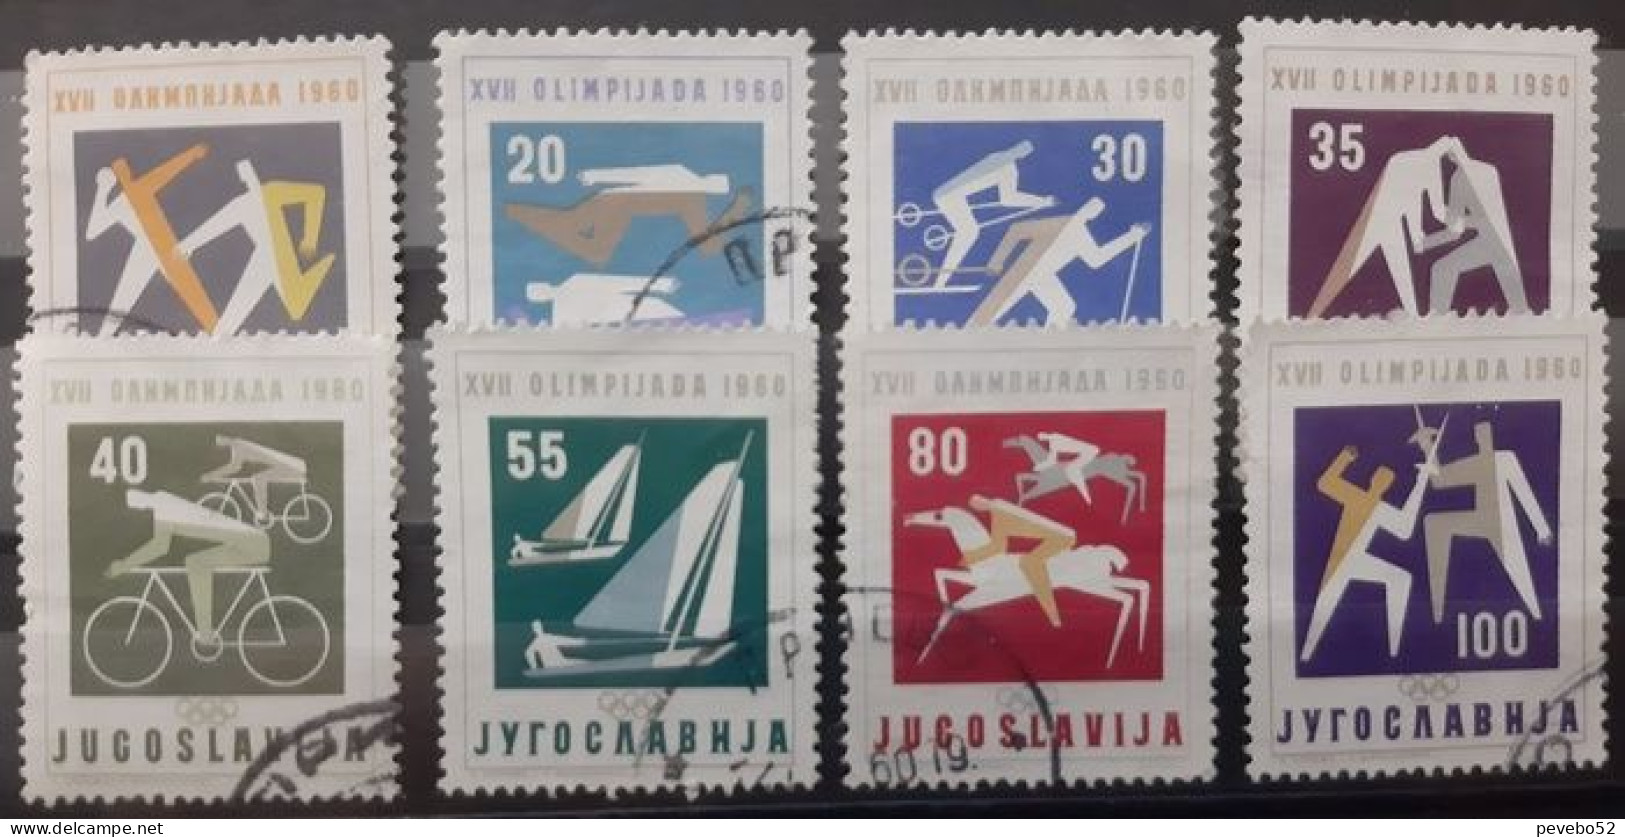 YUGOSLAVIA 1960 - Olympic Games - Rome, Italy USED - Gebruikt